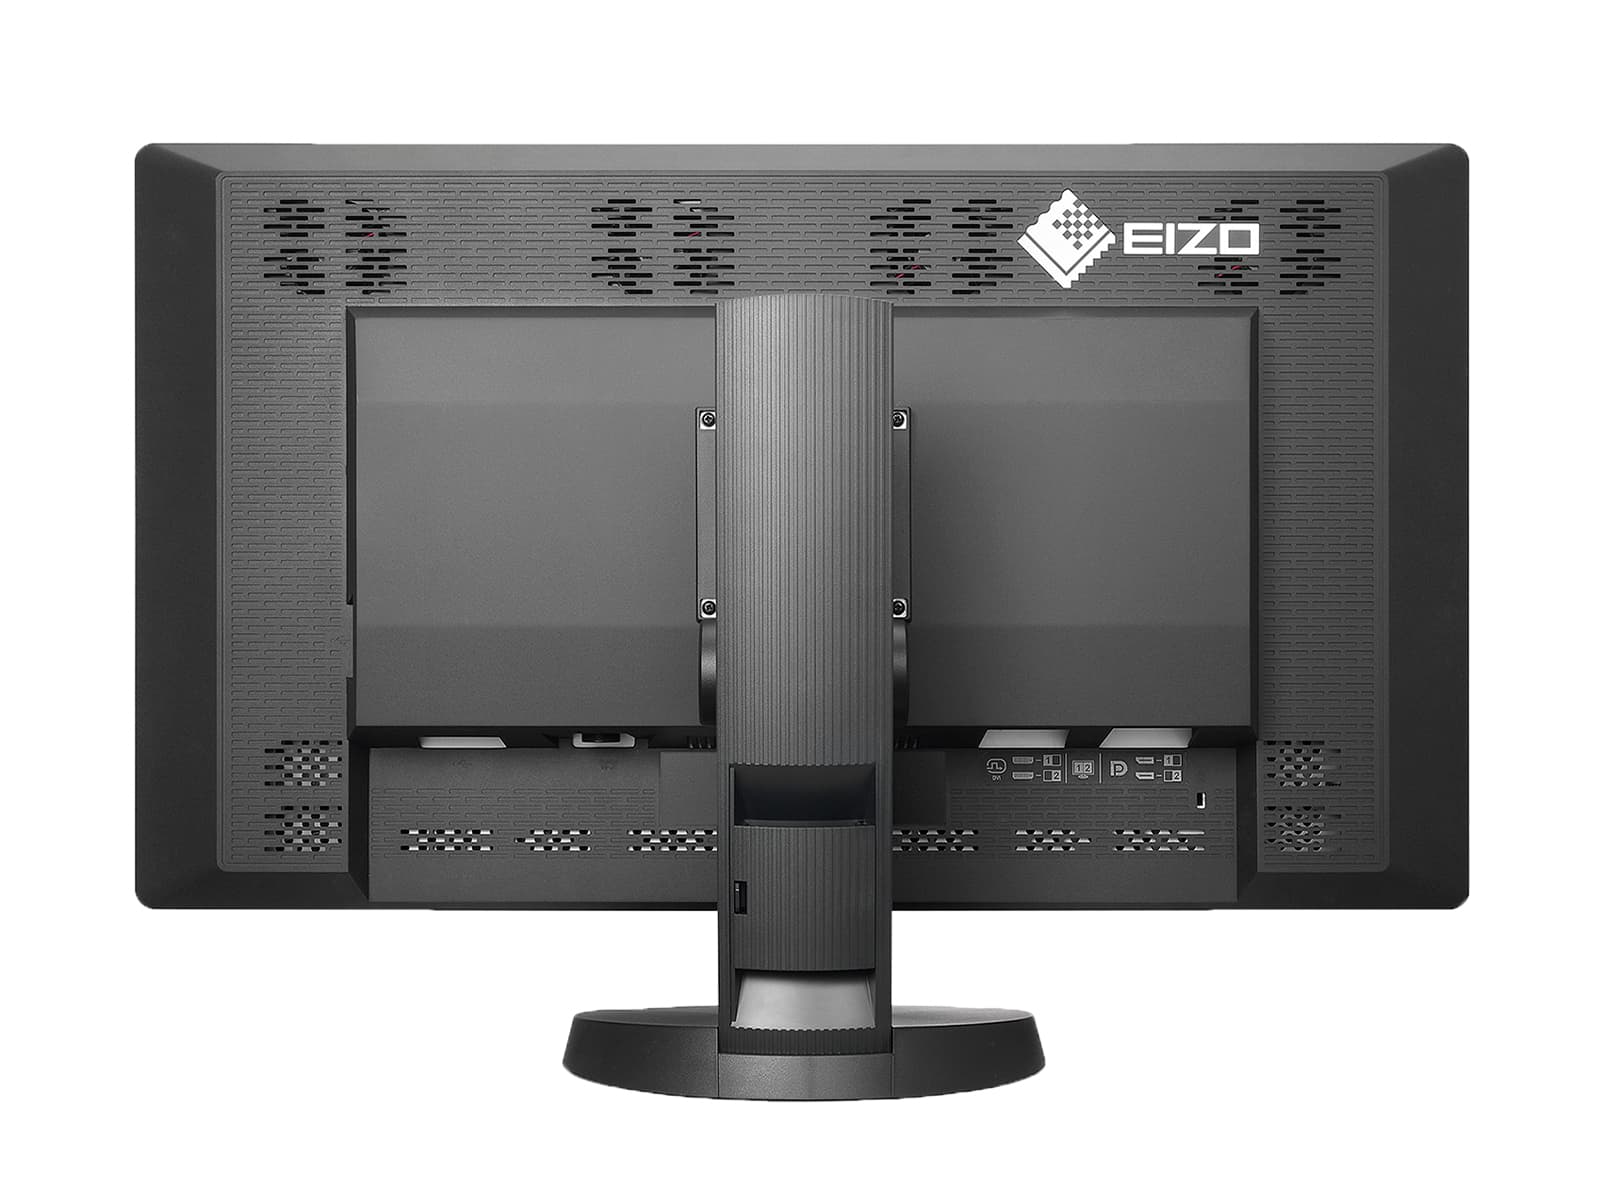 Eizo RadiForce RX850 Fusion Color LED Mammo 3D-DBT Brustbildgebungsdisplay (RX850-BK) Monitore.com